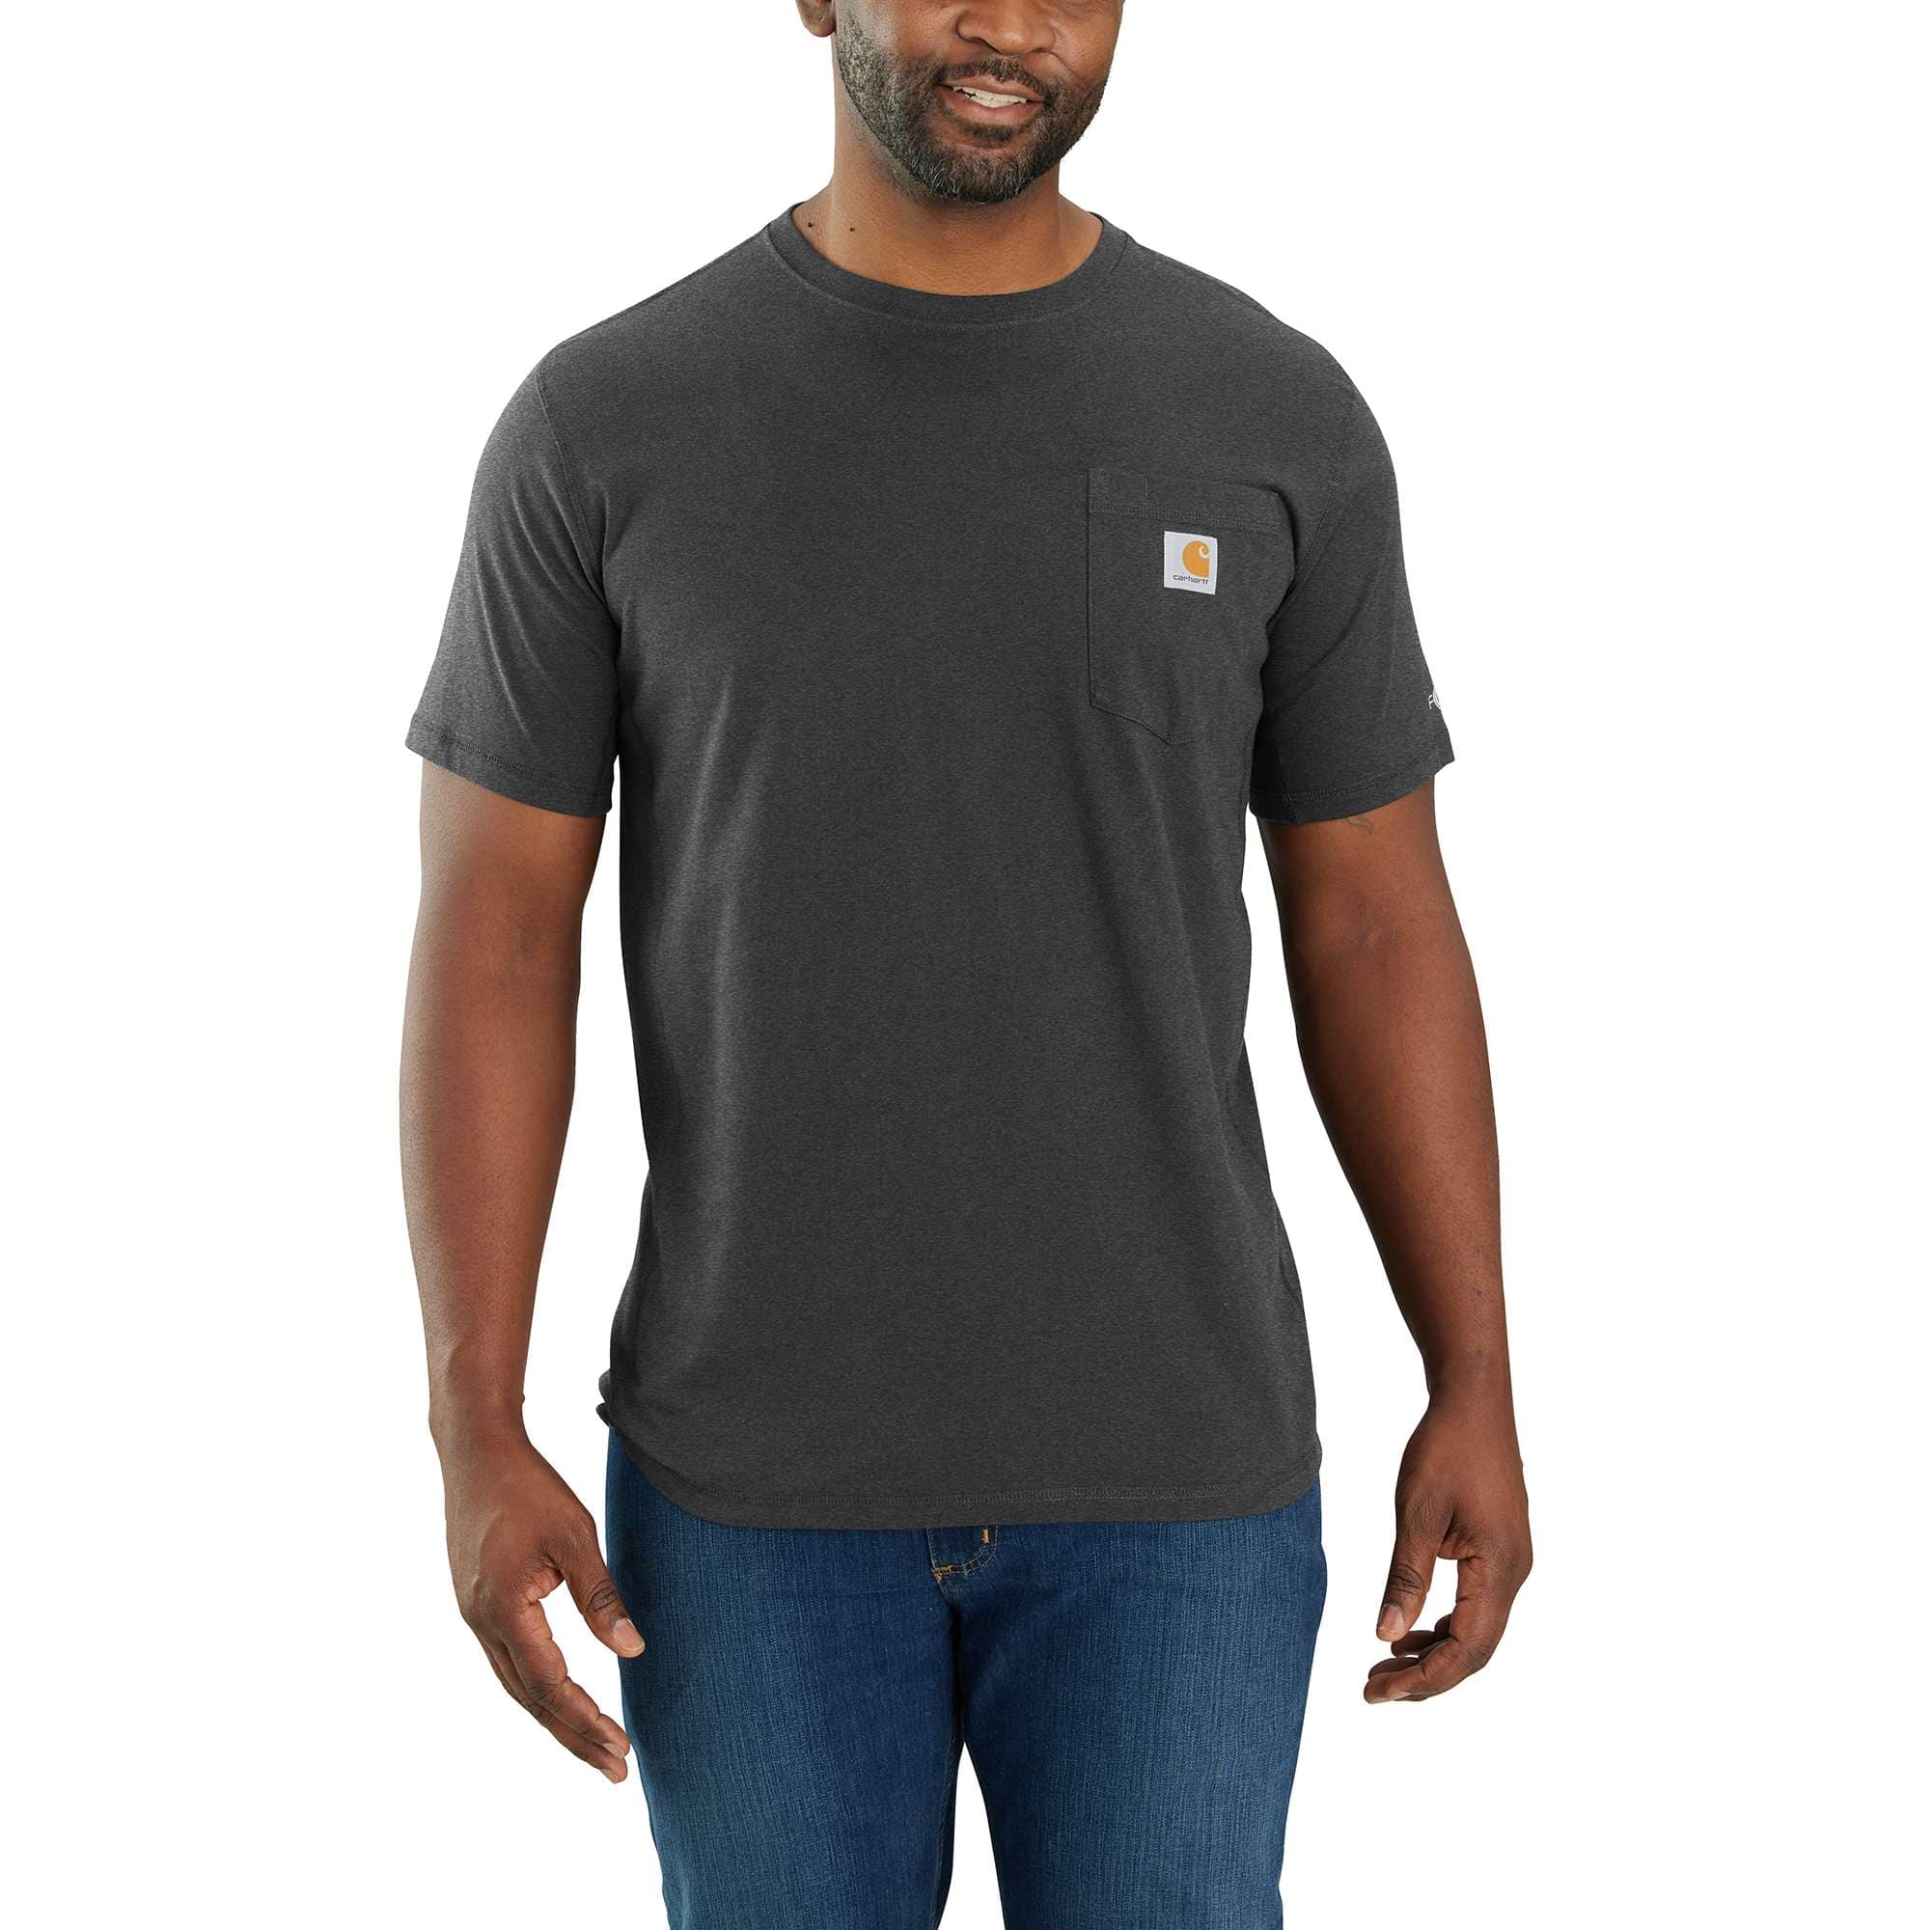 Men & Company Uniform Gear Tees Carhartt Company Men\'s T-shirts for |